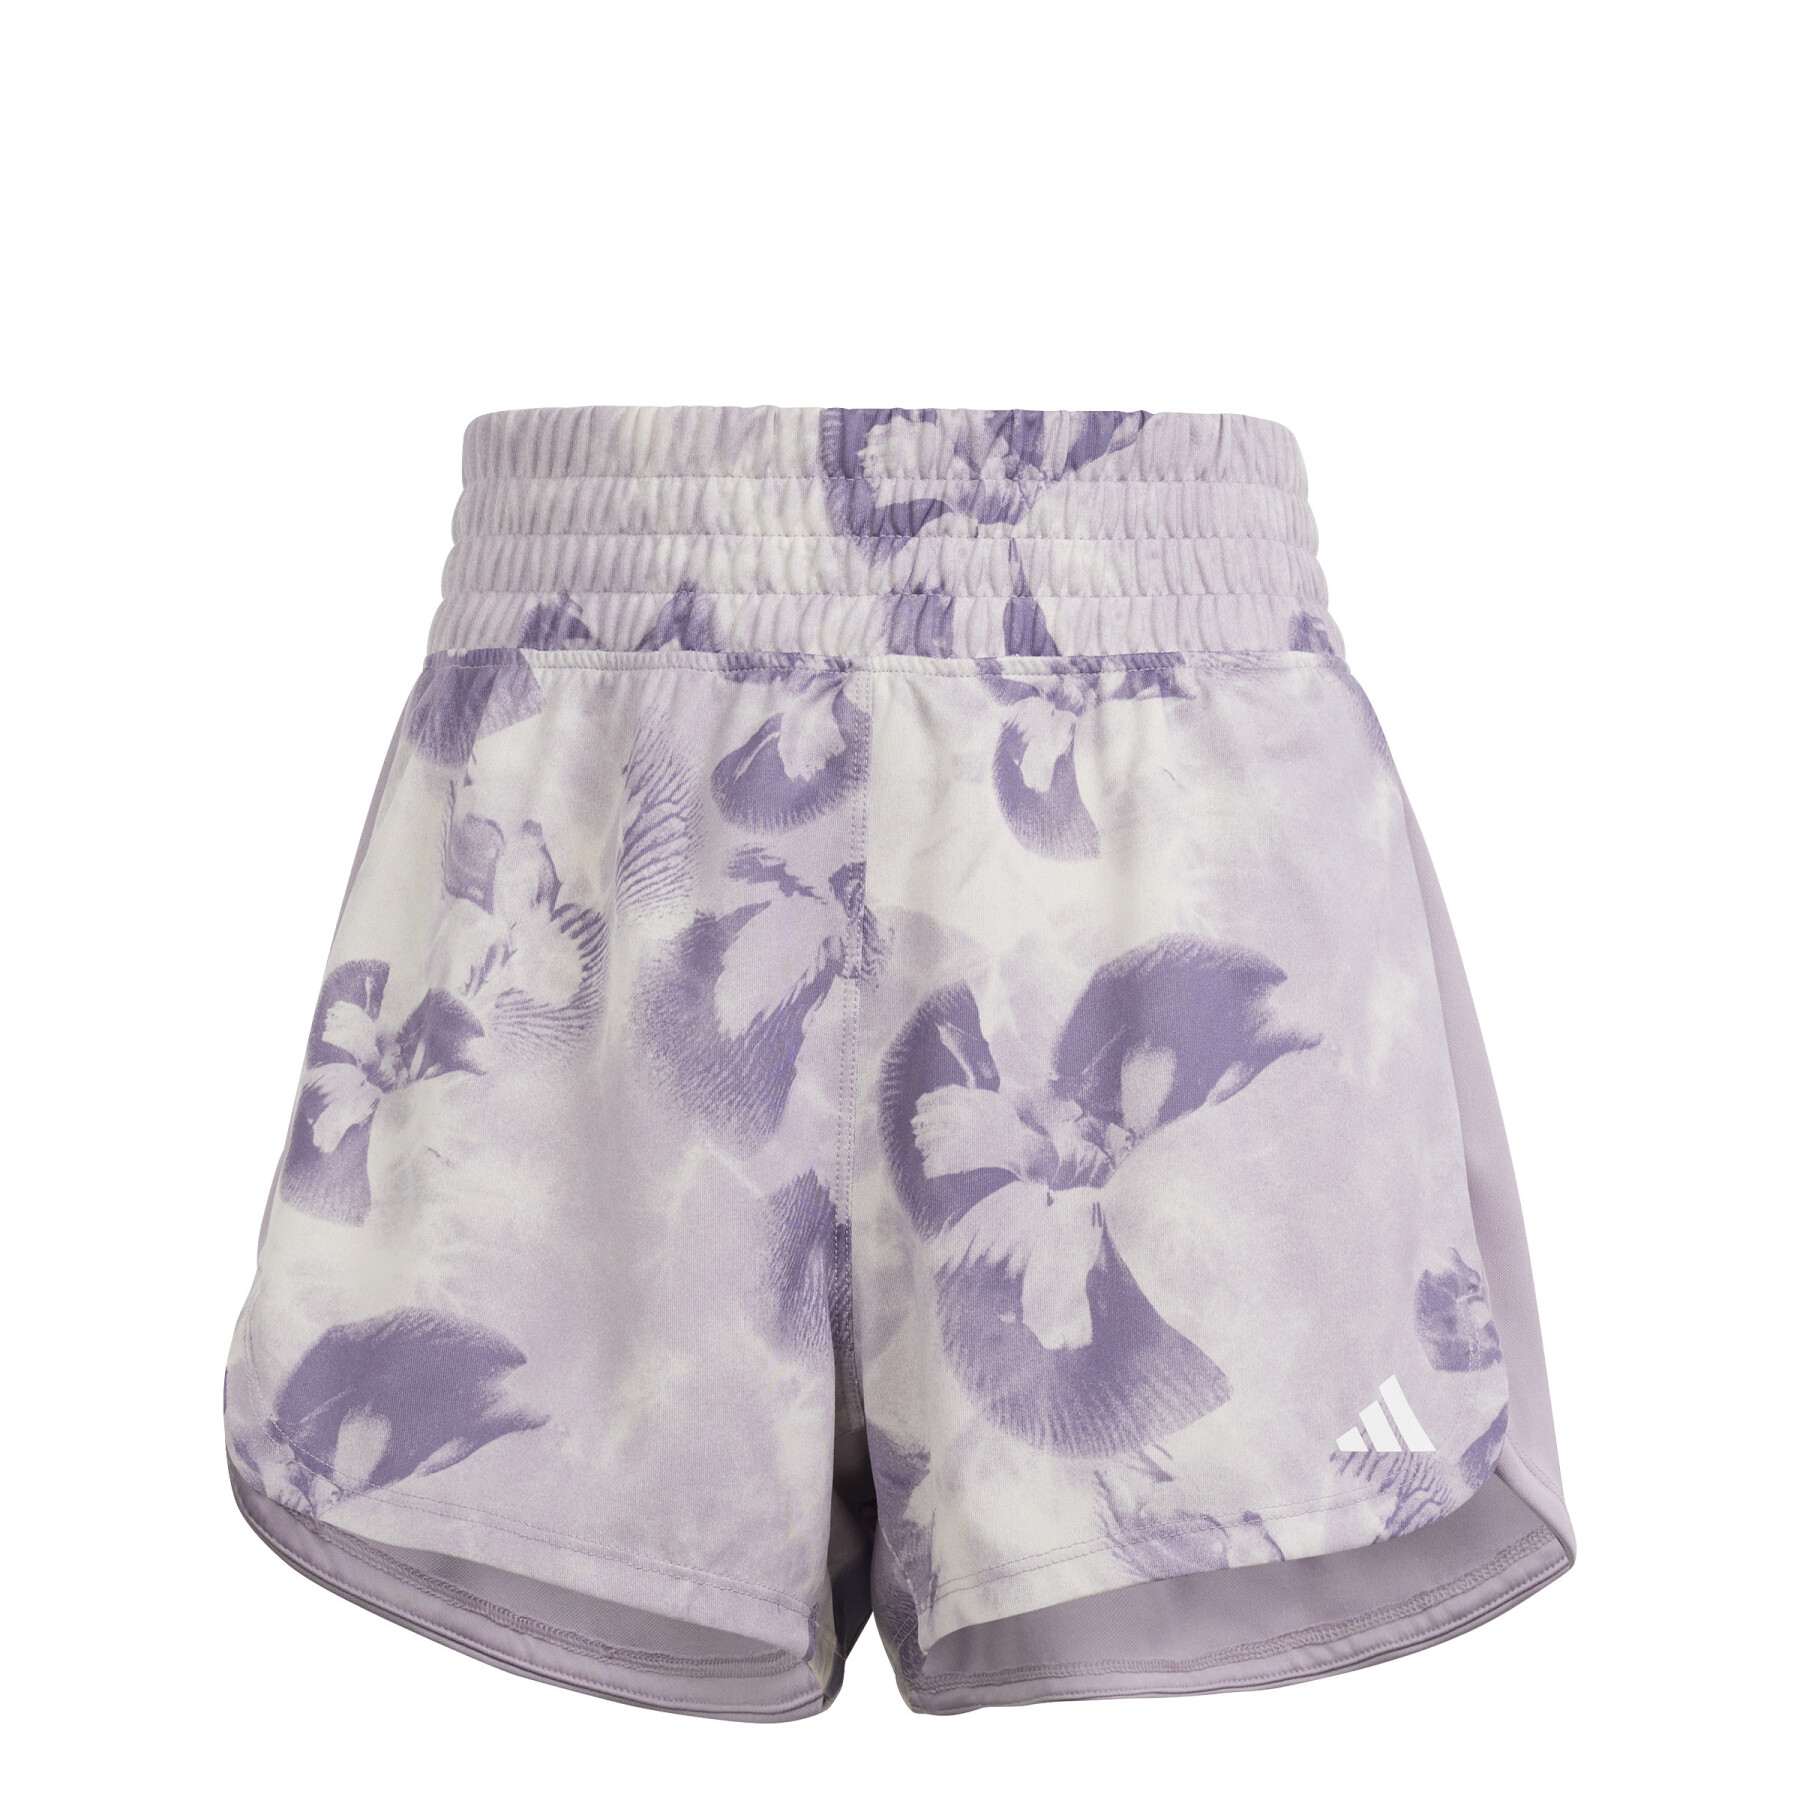 Women's knit shorts adidas Pacer Essentials Aop Flower Tie-Dye